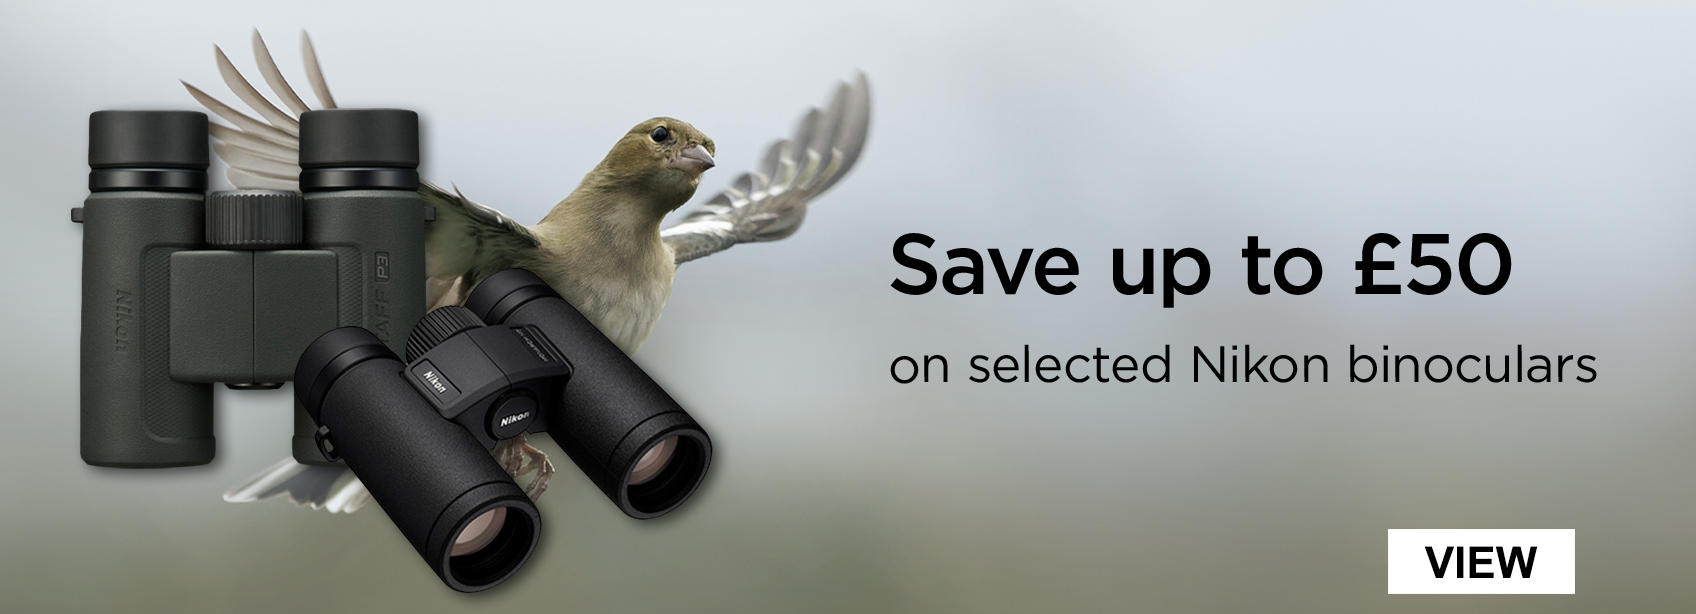 Save up to £50 on selected Nikon binoculars